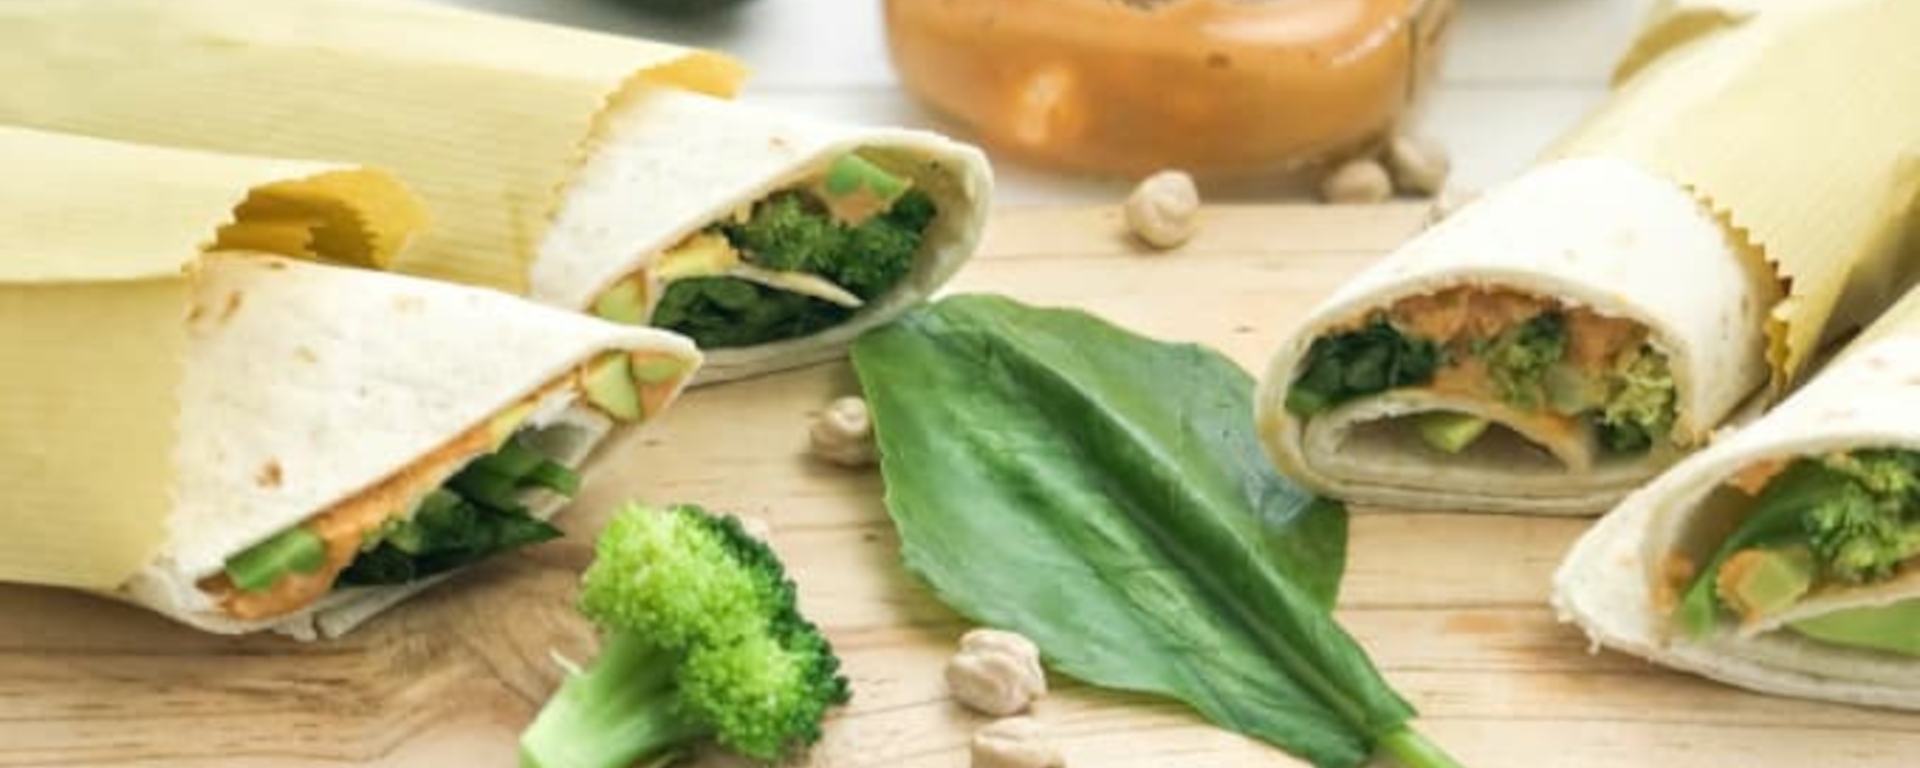 Kale, Broccoli and Avocado Hummus Wraps